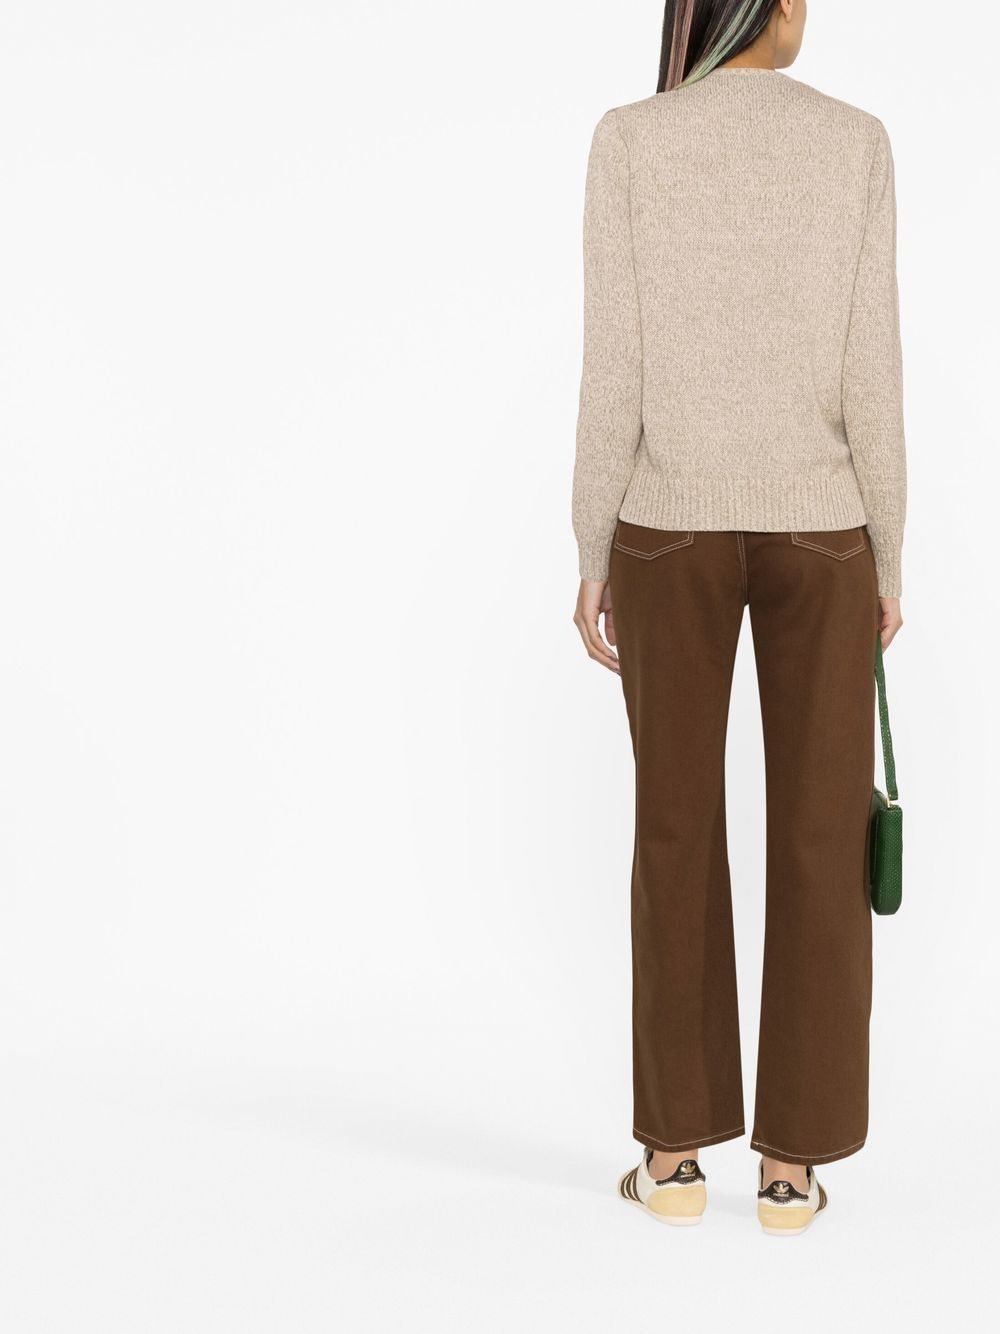 NWT $165 POLO RALPH LAUREN Girls 6X Polo Bear Sweater intarsia knit  Cotton-Wool